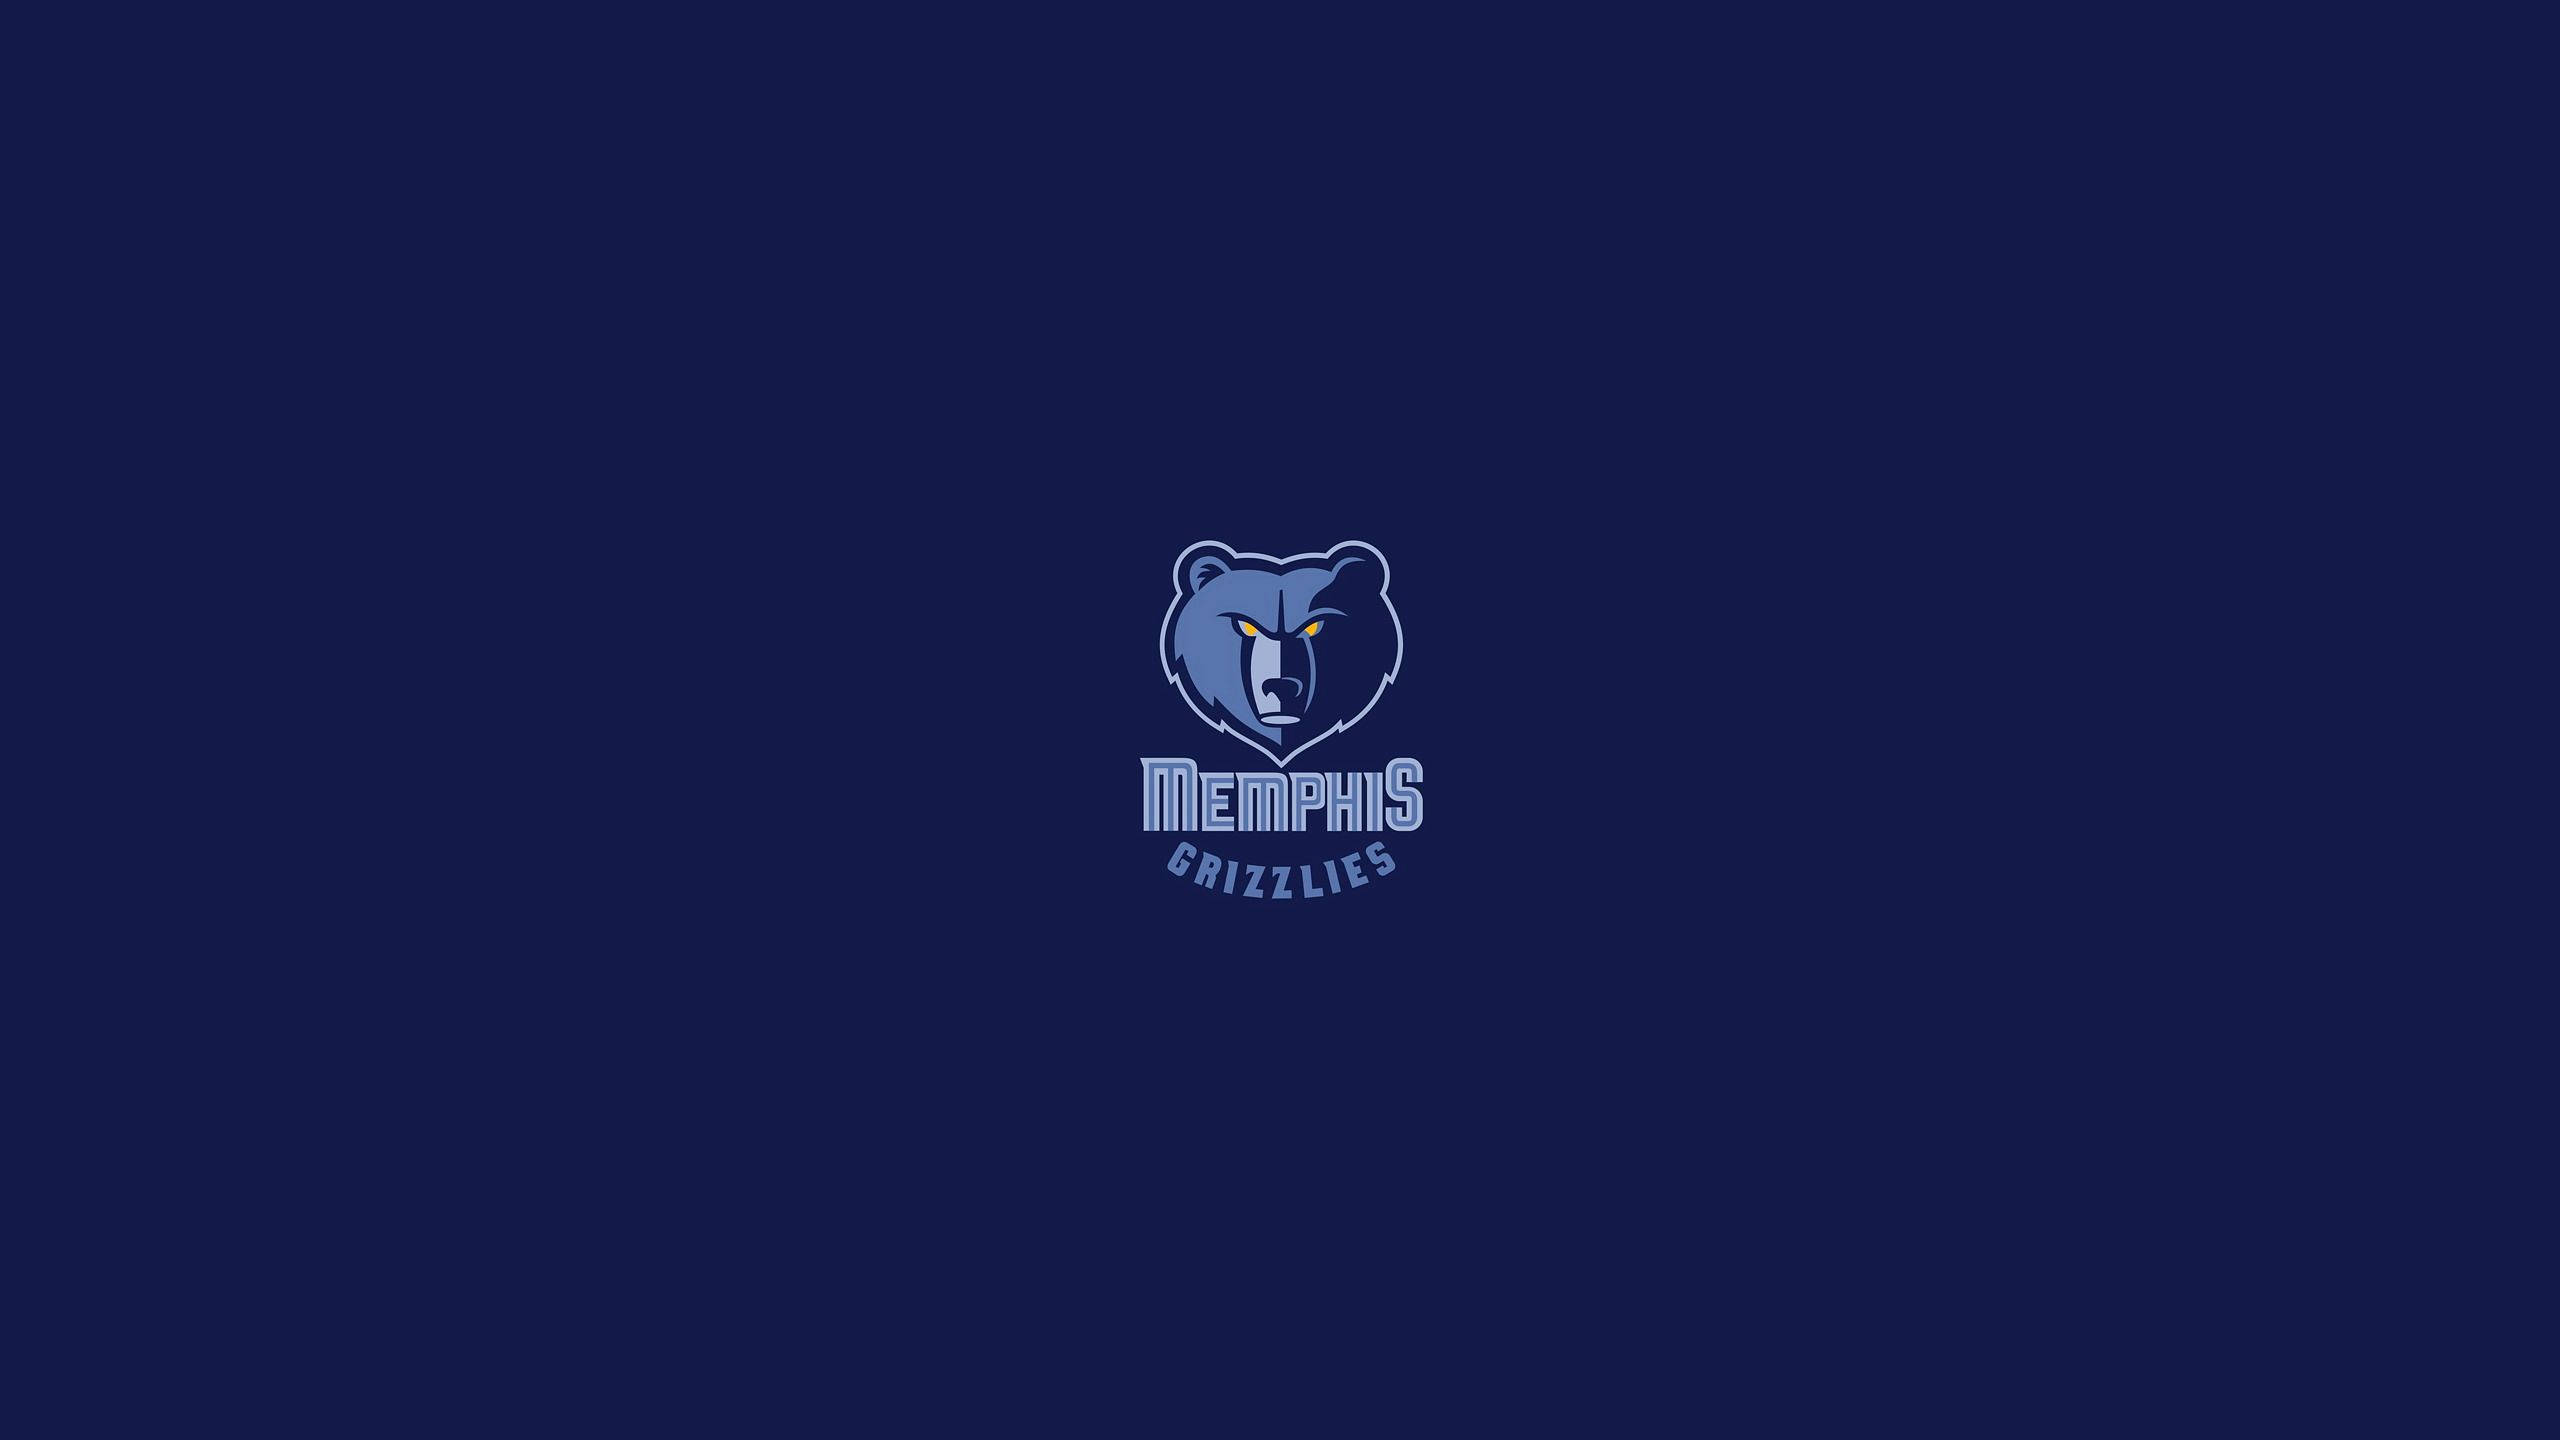 Logotipode Los Memphis Grizzlies De La Nba En Azul Oscuro Minimalista. Fondo de pantalla